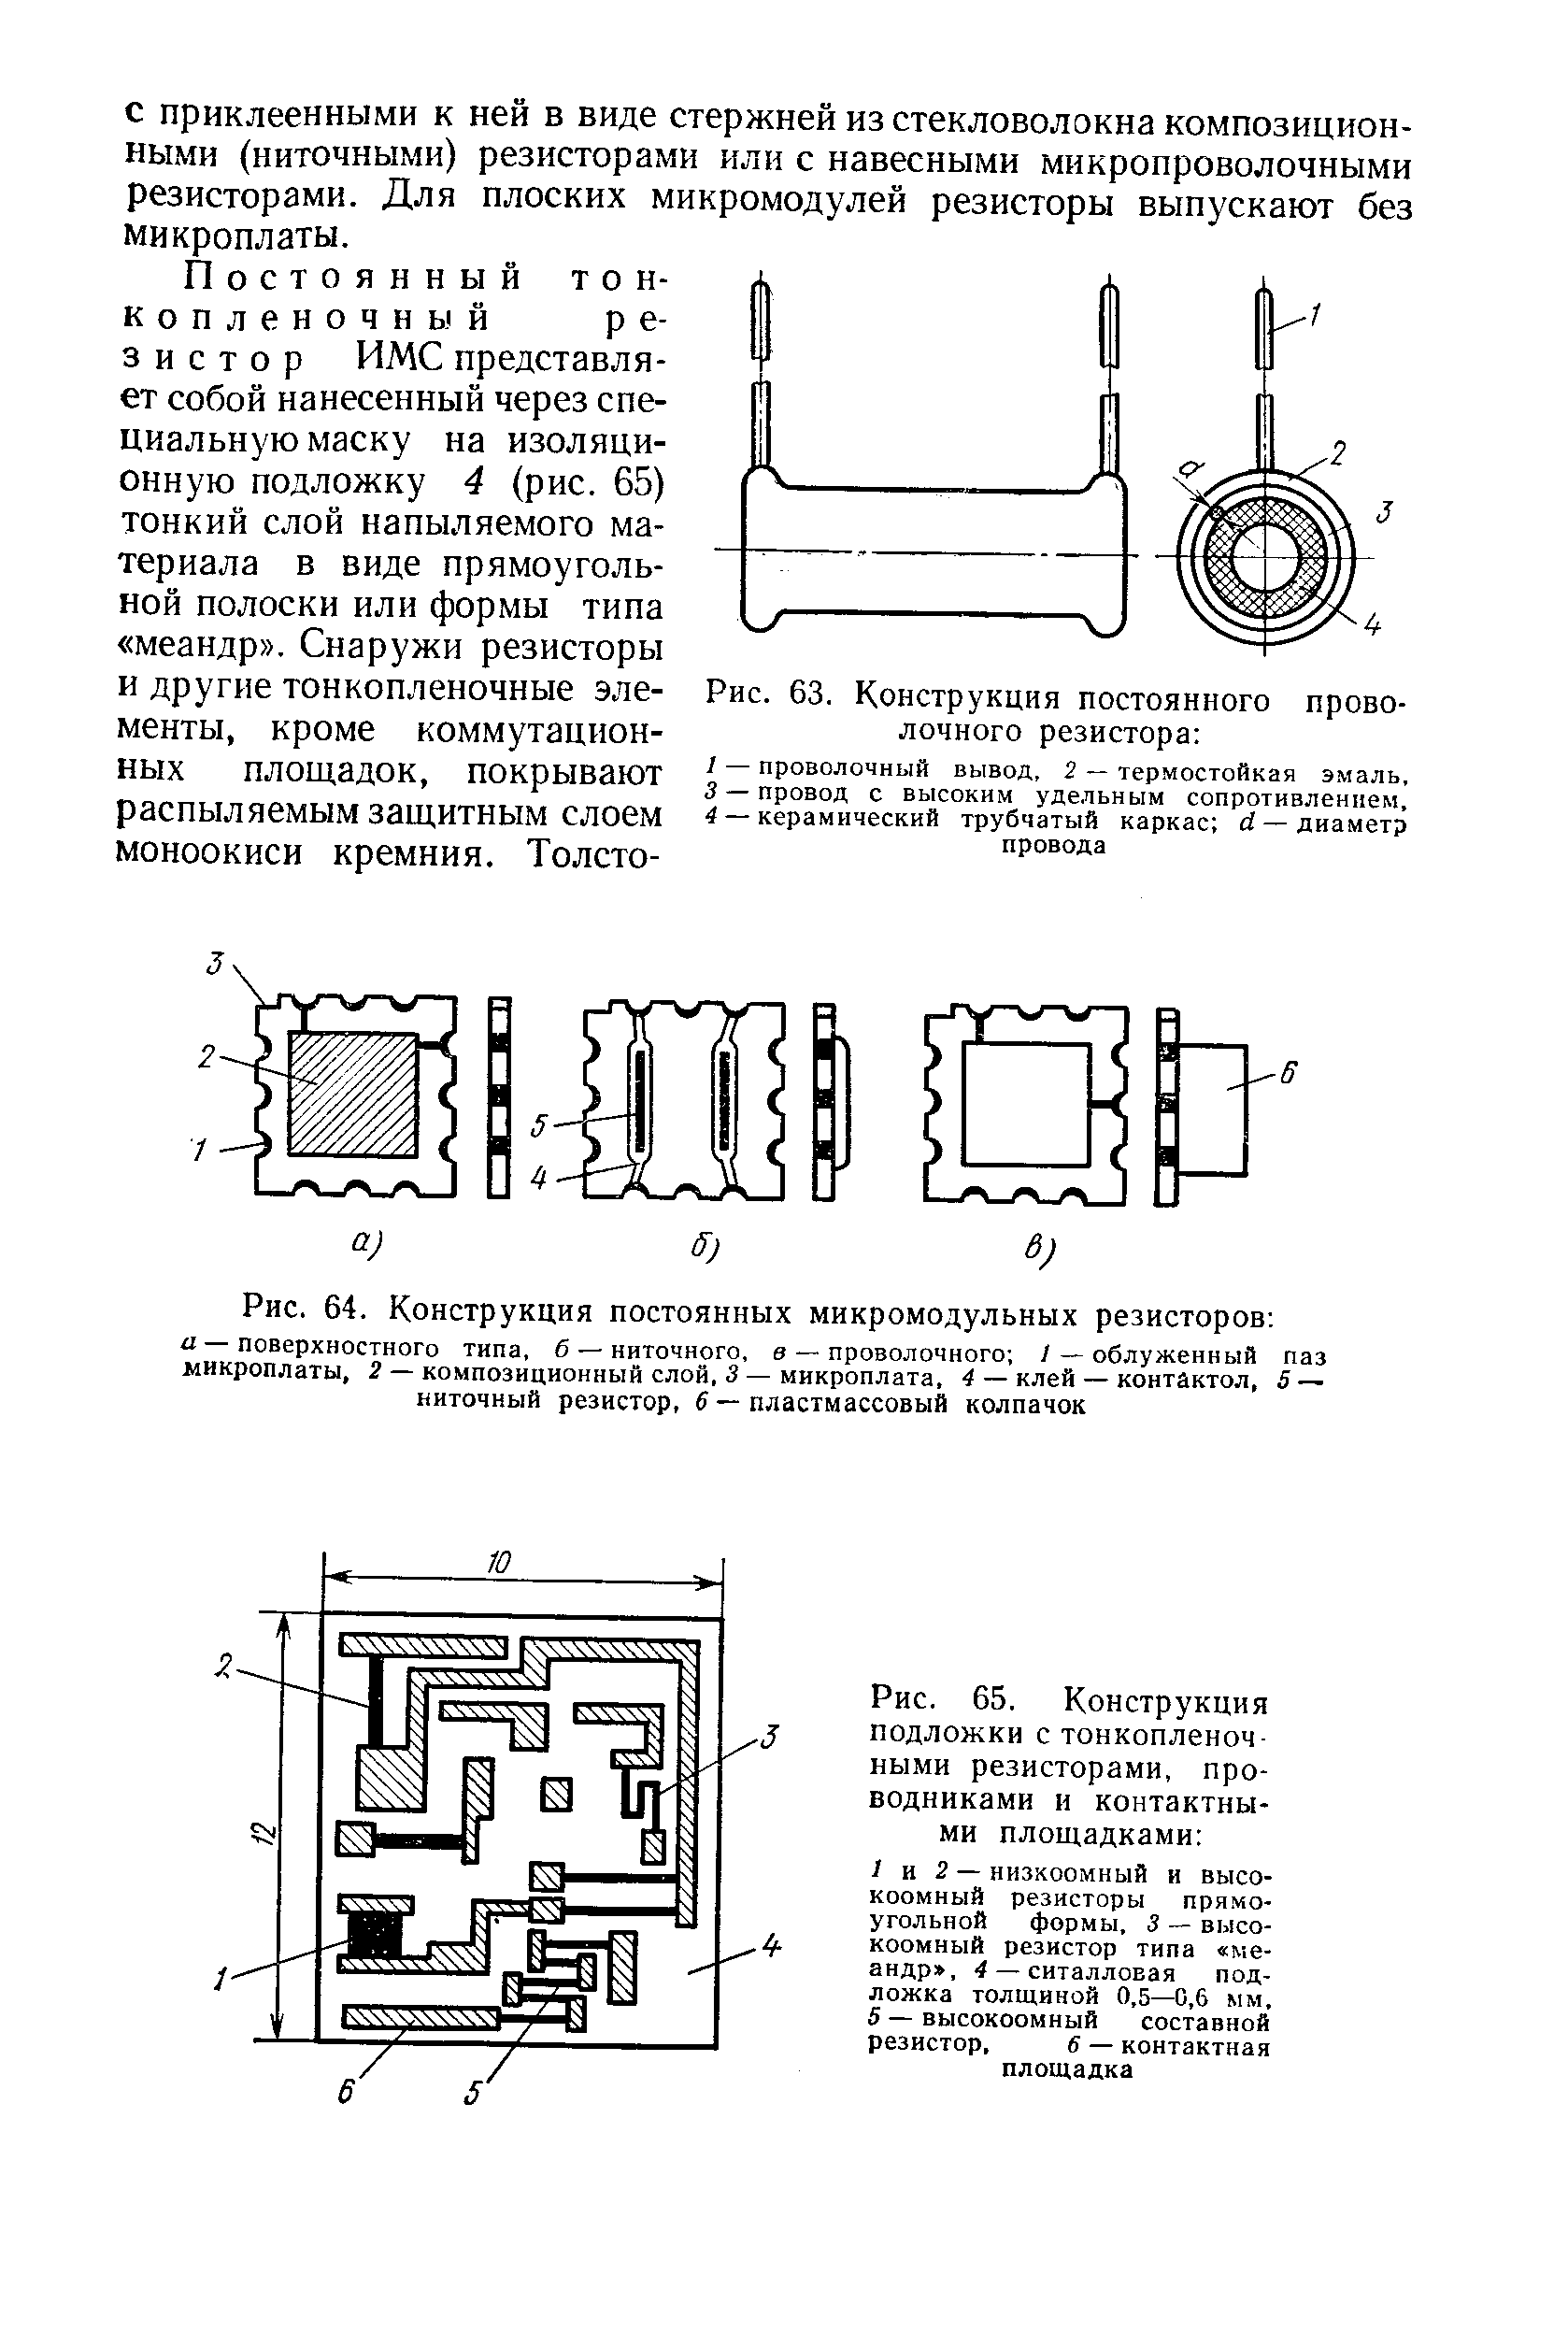 Рис. 63. Конструкция постоянного проволочного резистора 
